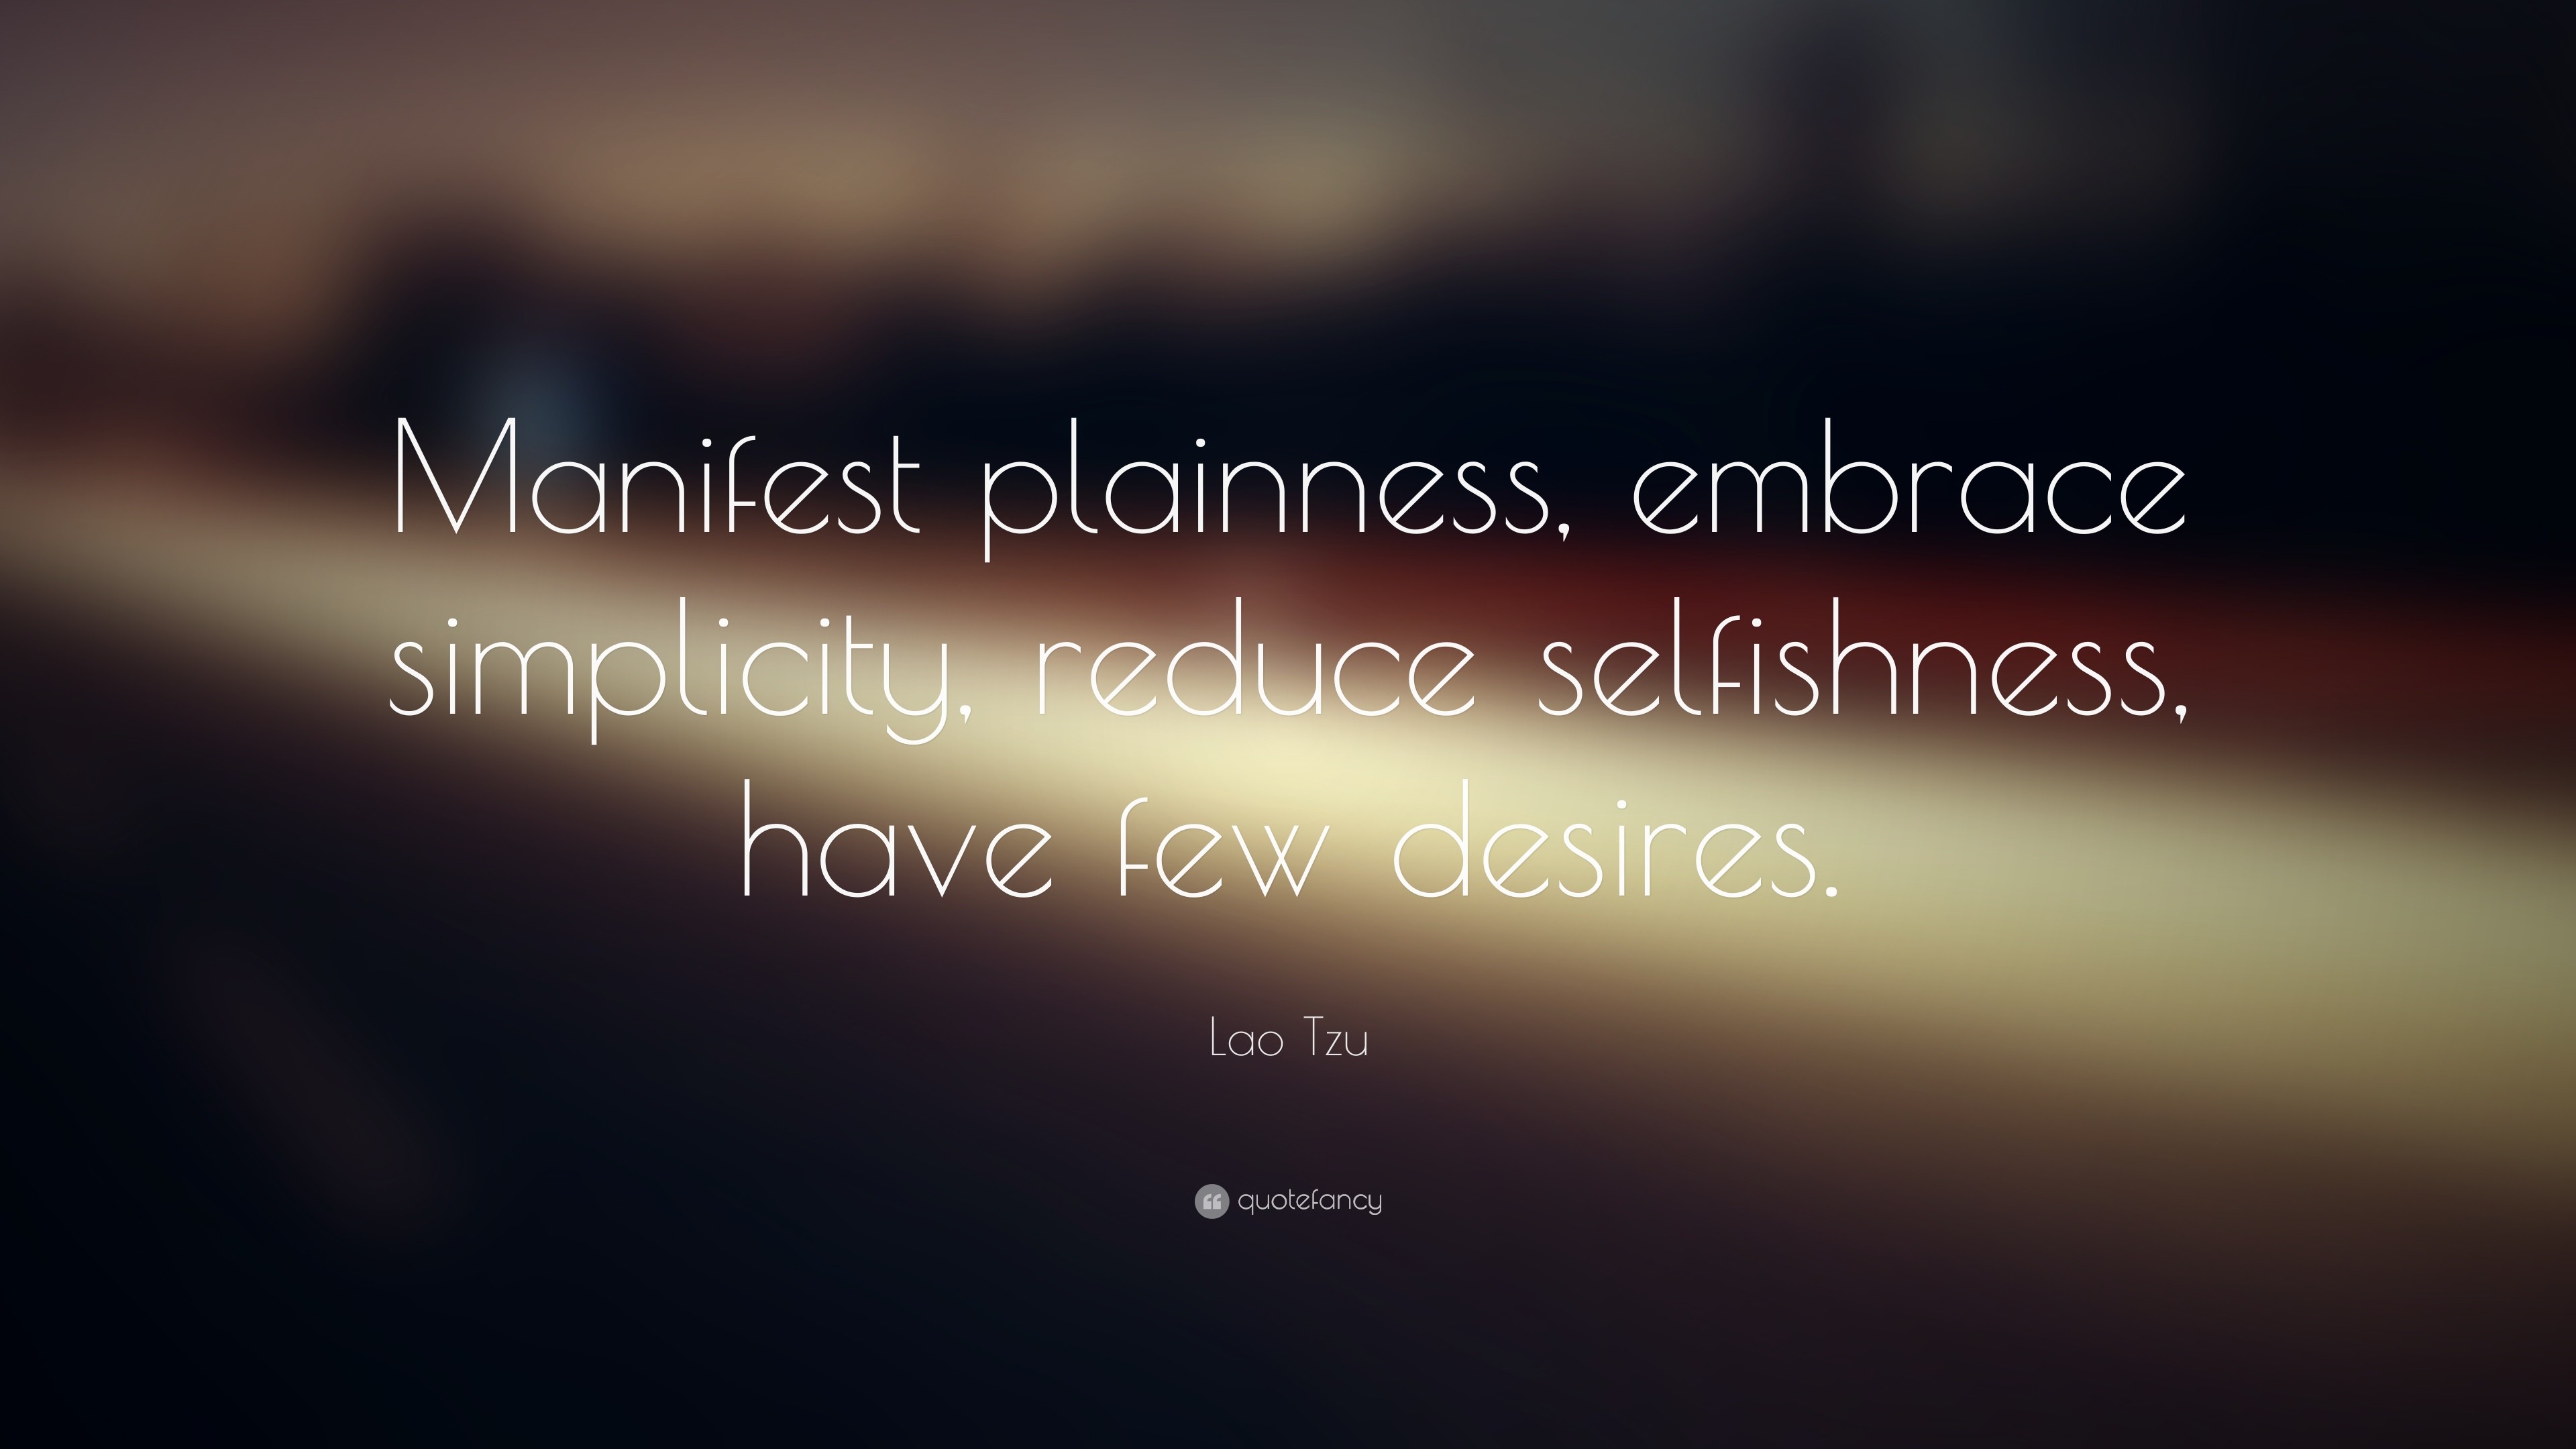 3840x2160 Lao Tzu Quote: “Manifest plainness, embrace simplicity, reduce selfishness,  have few